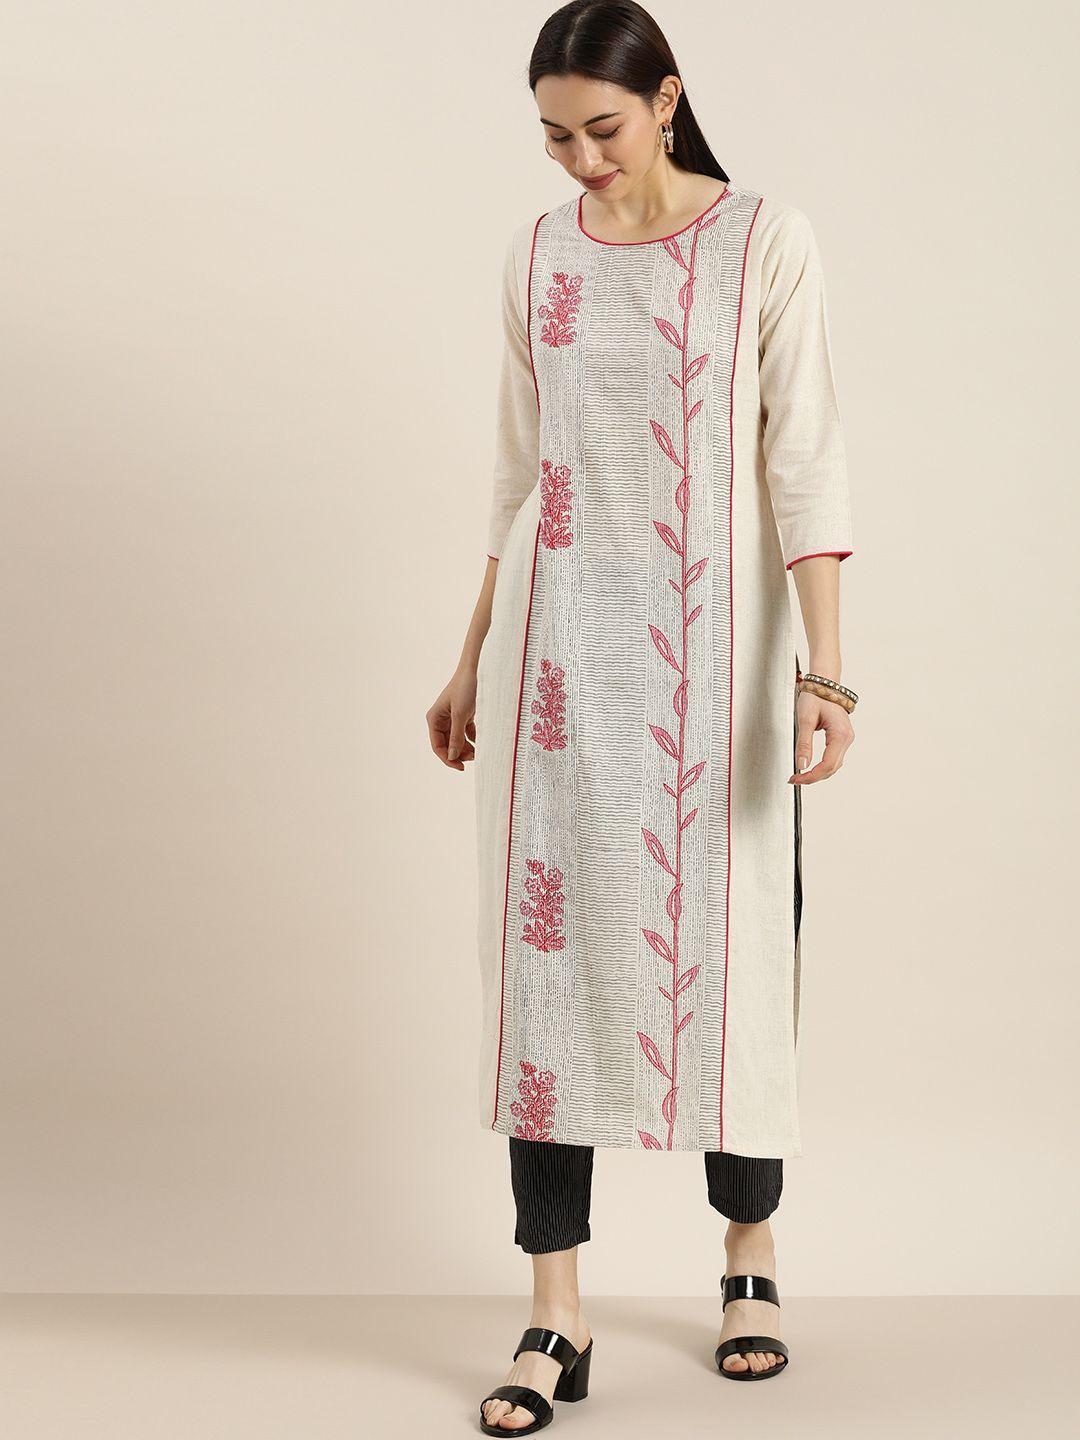 ksut women off-white & pink printed kurta with trousers